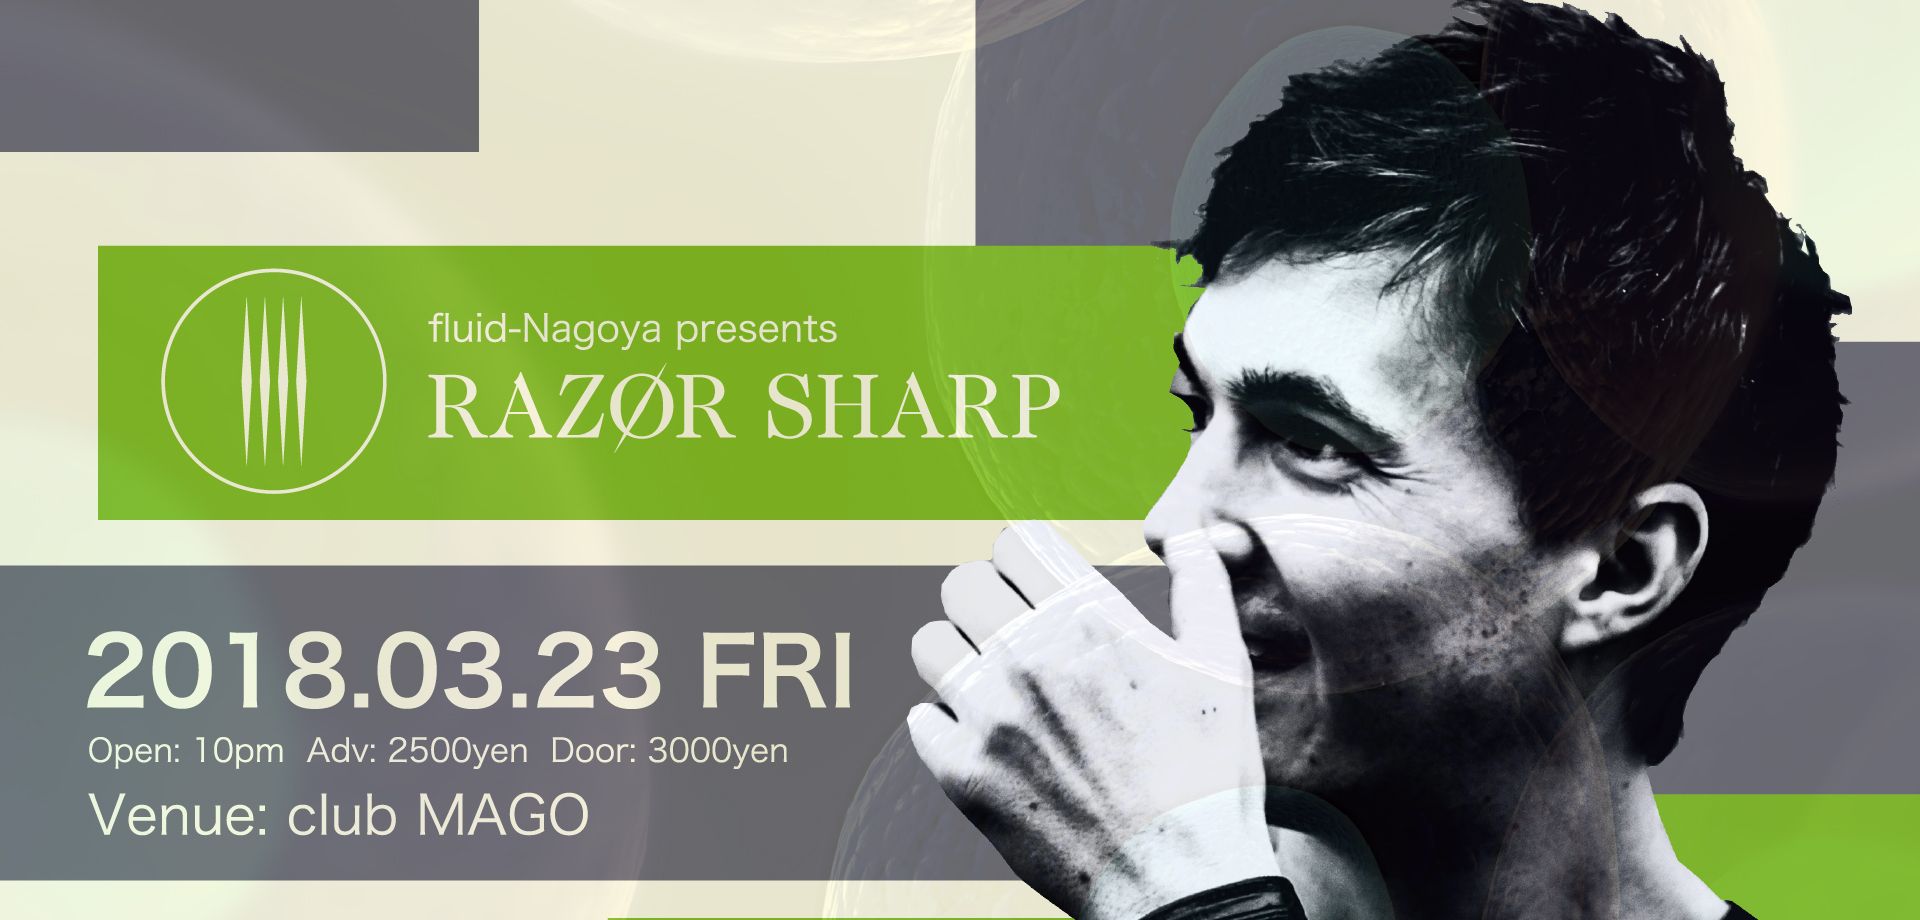 fluid-Nagoya presents RAZOR SHARP